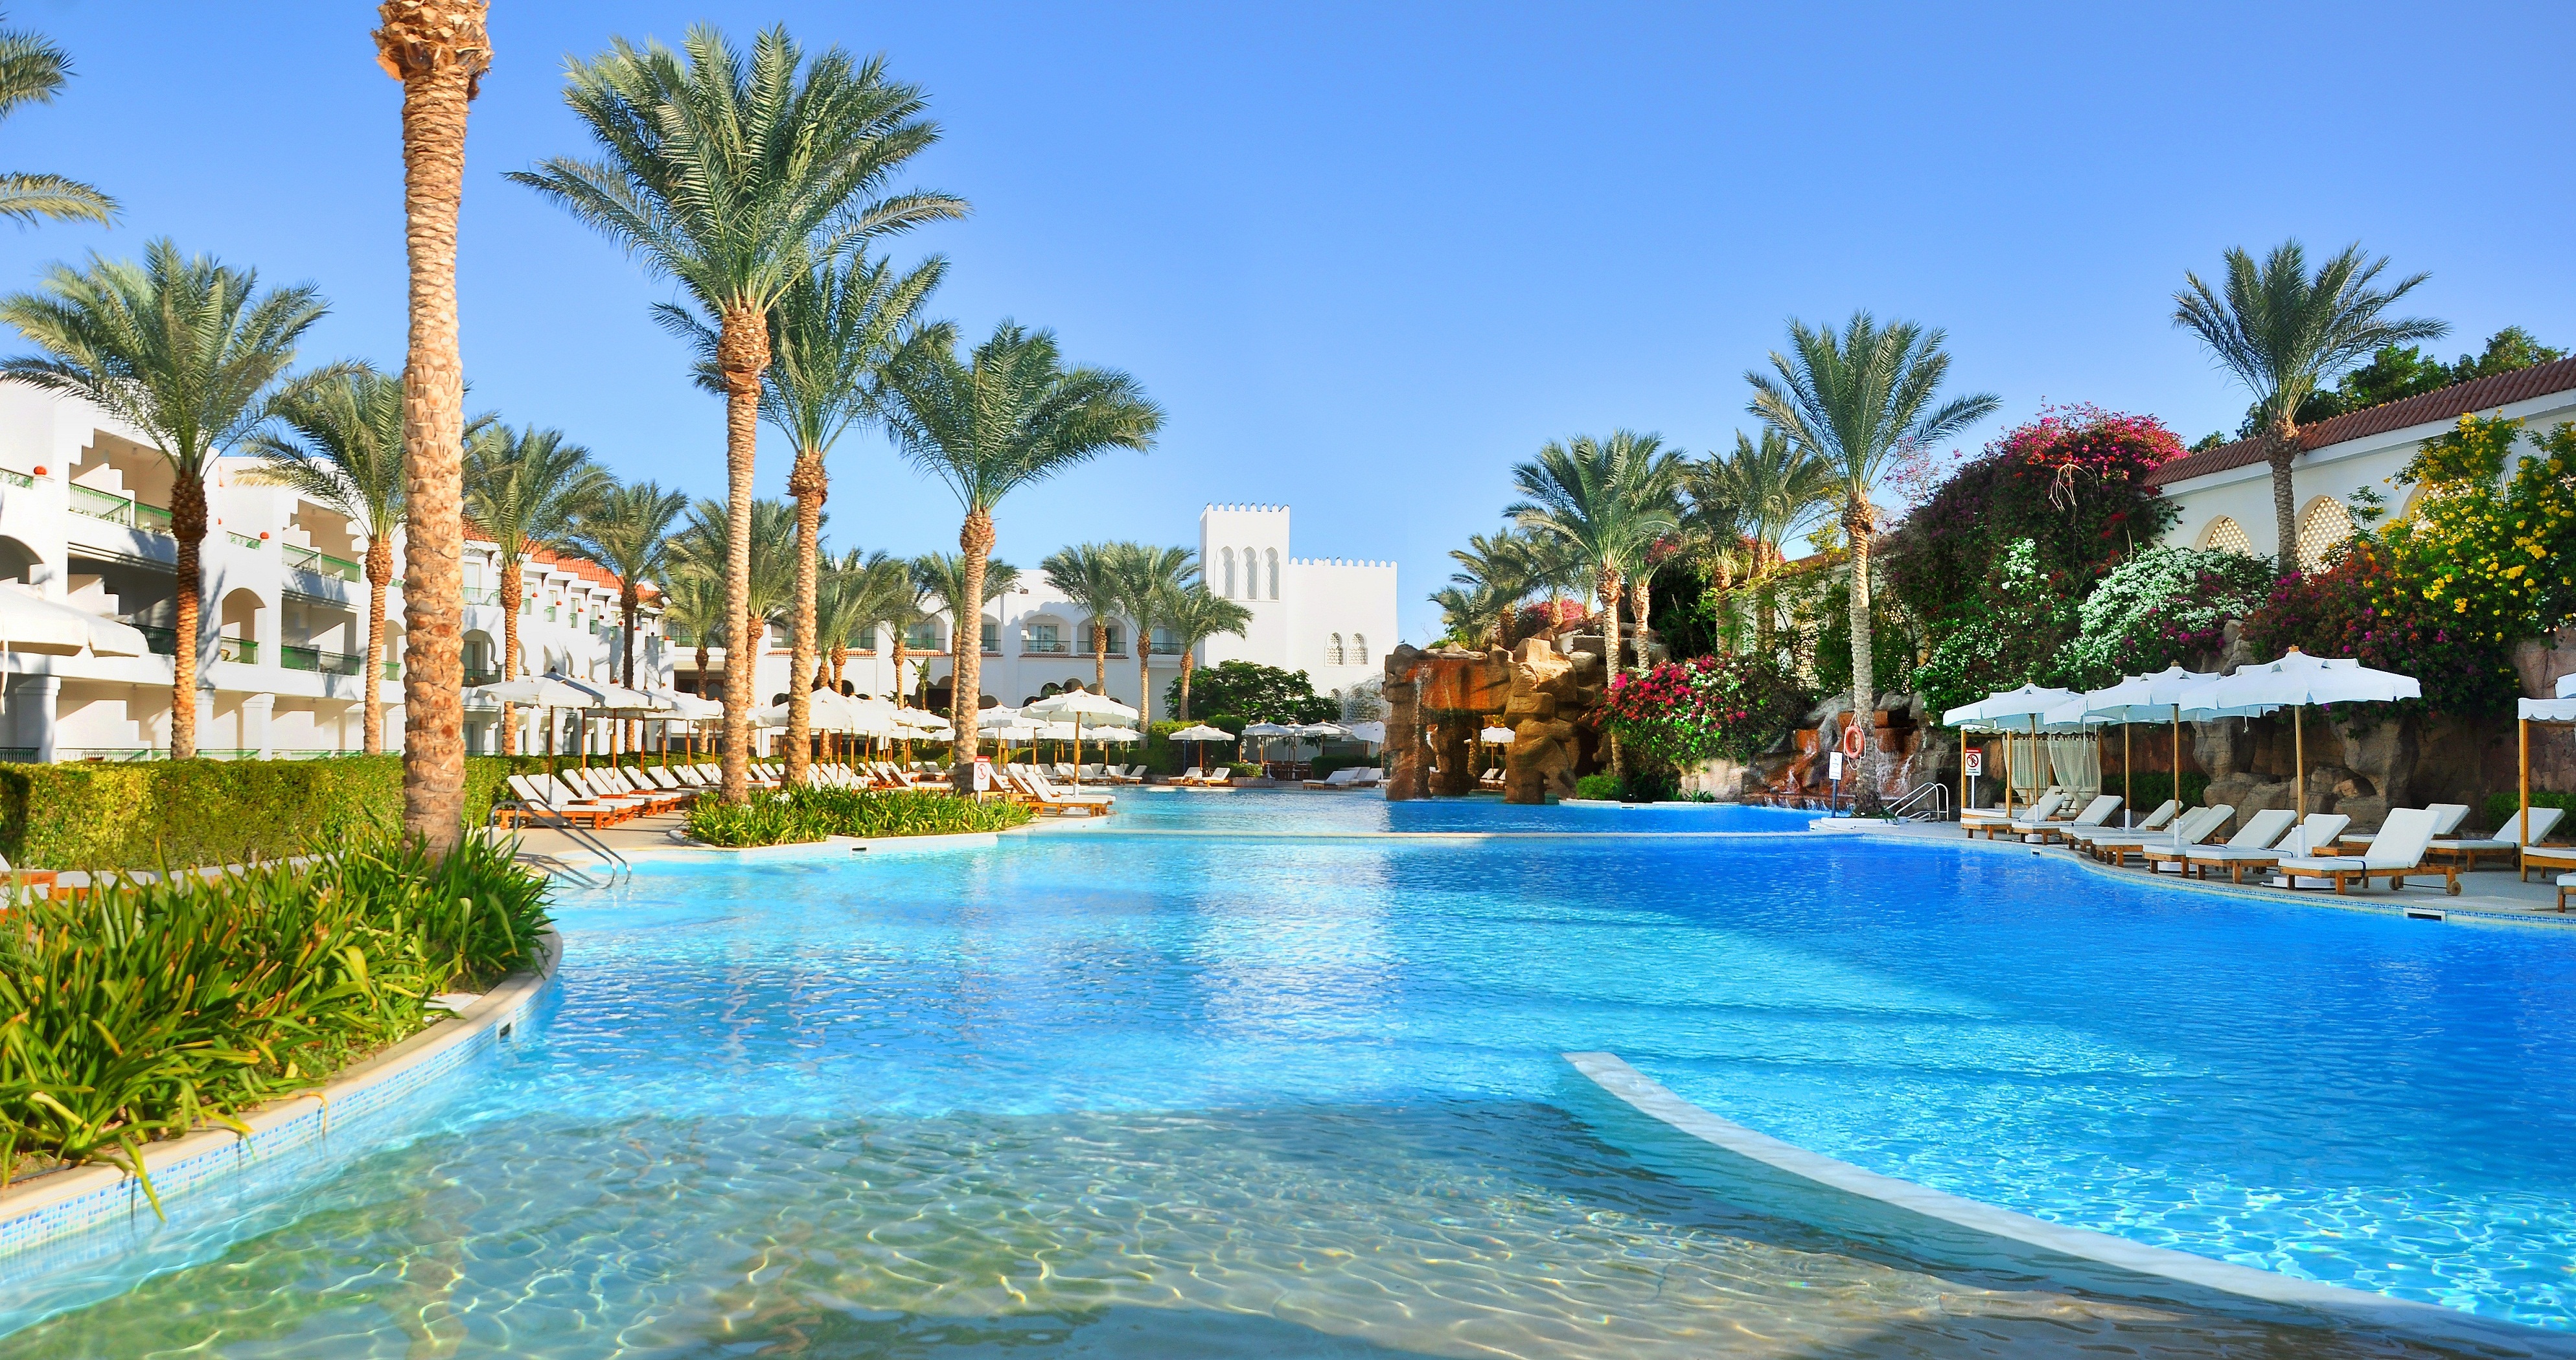 Baron resort i Sharm el sheikh